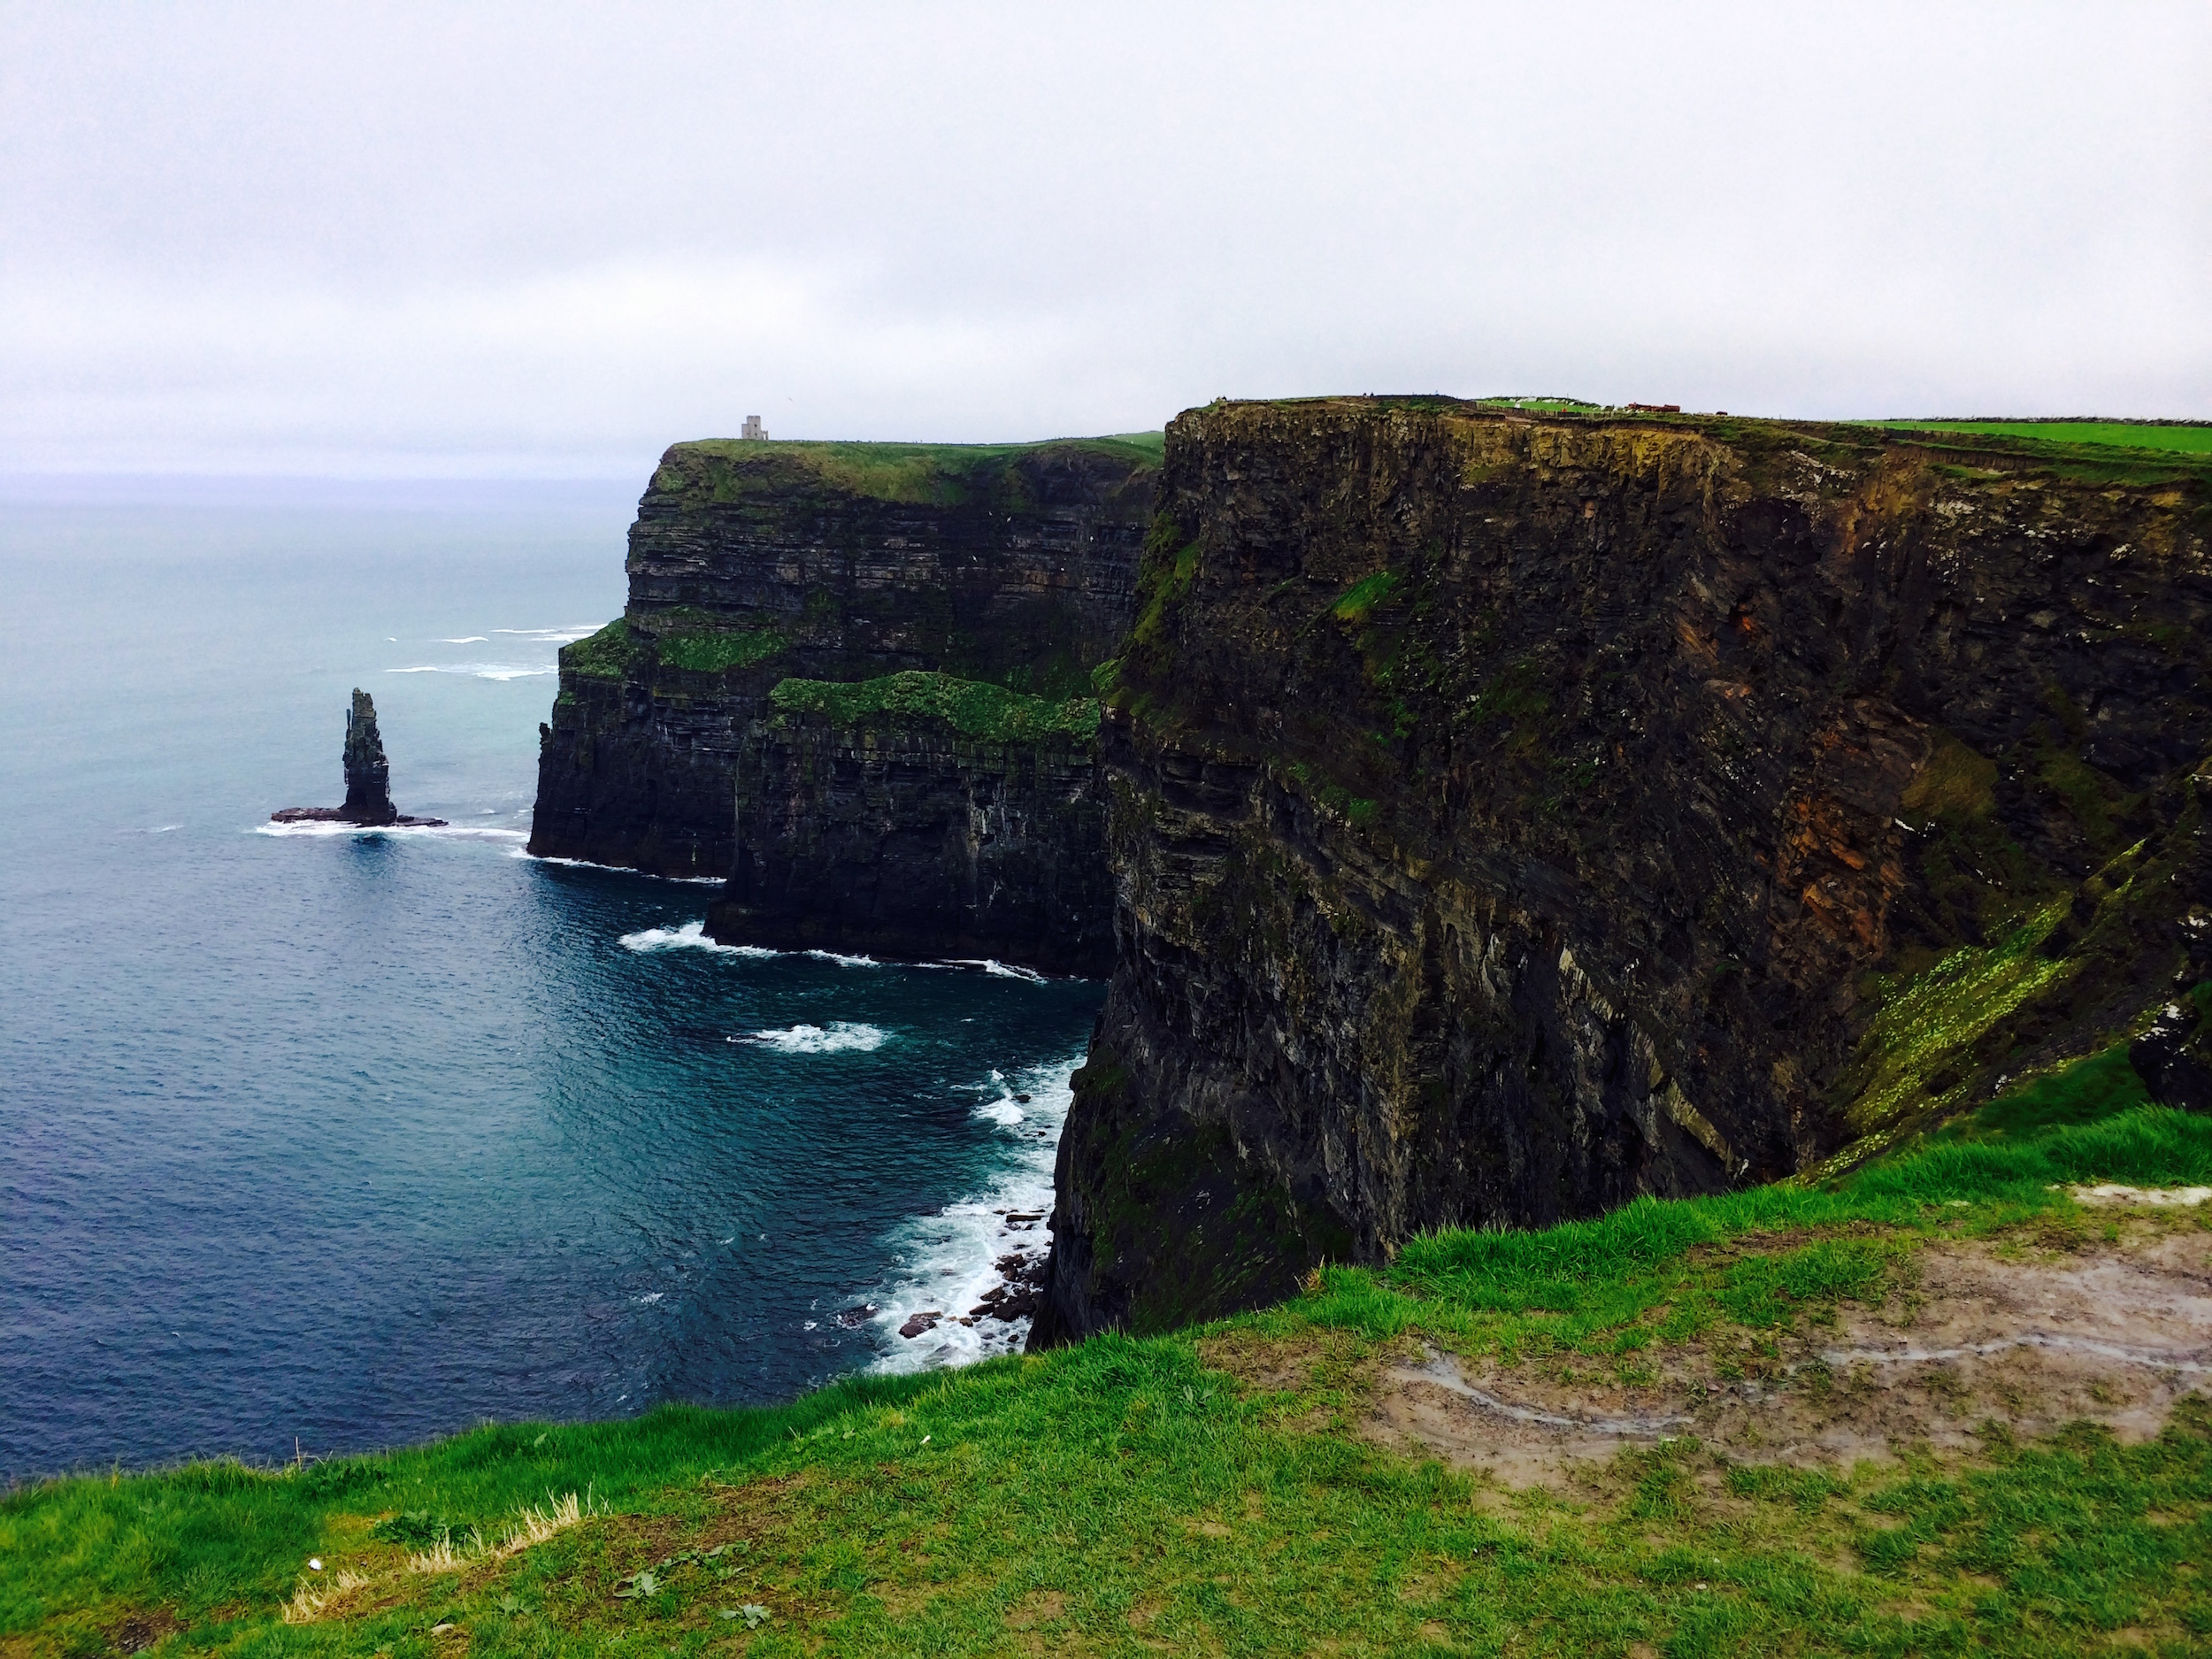   Ireland    Cliffs of Moher  